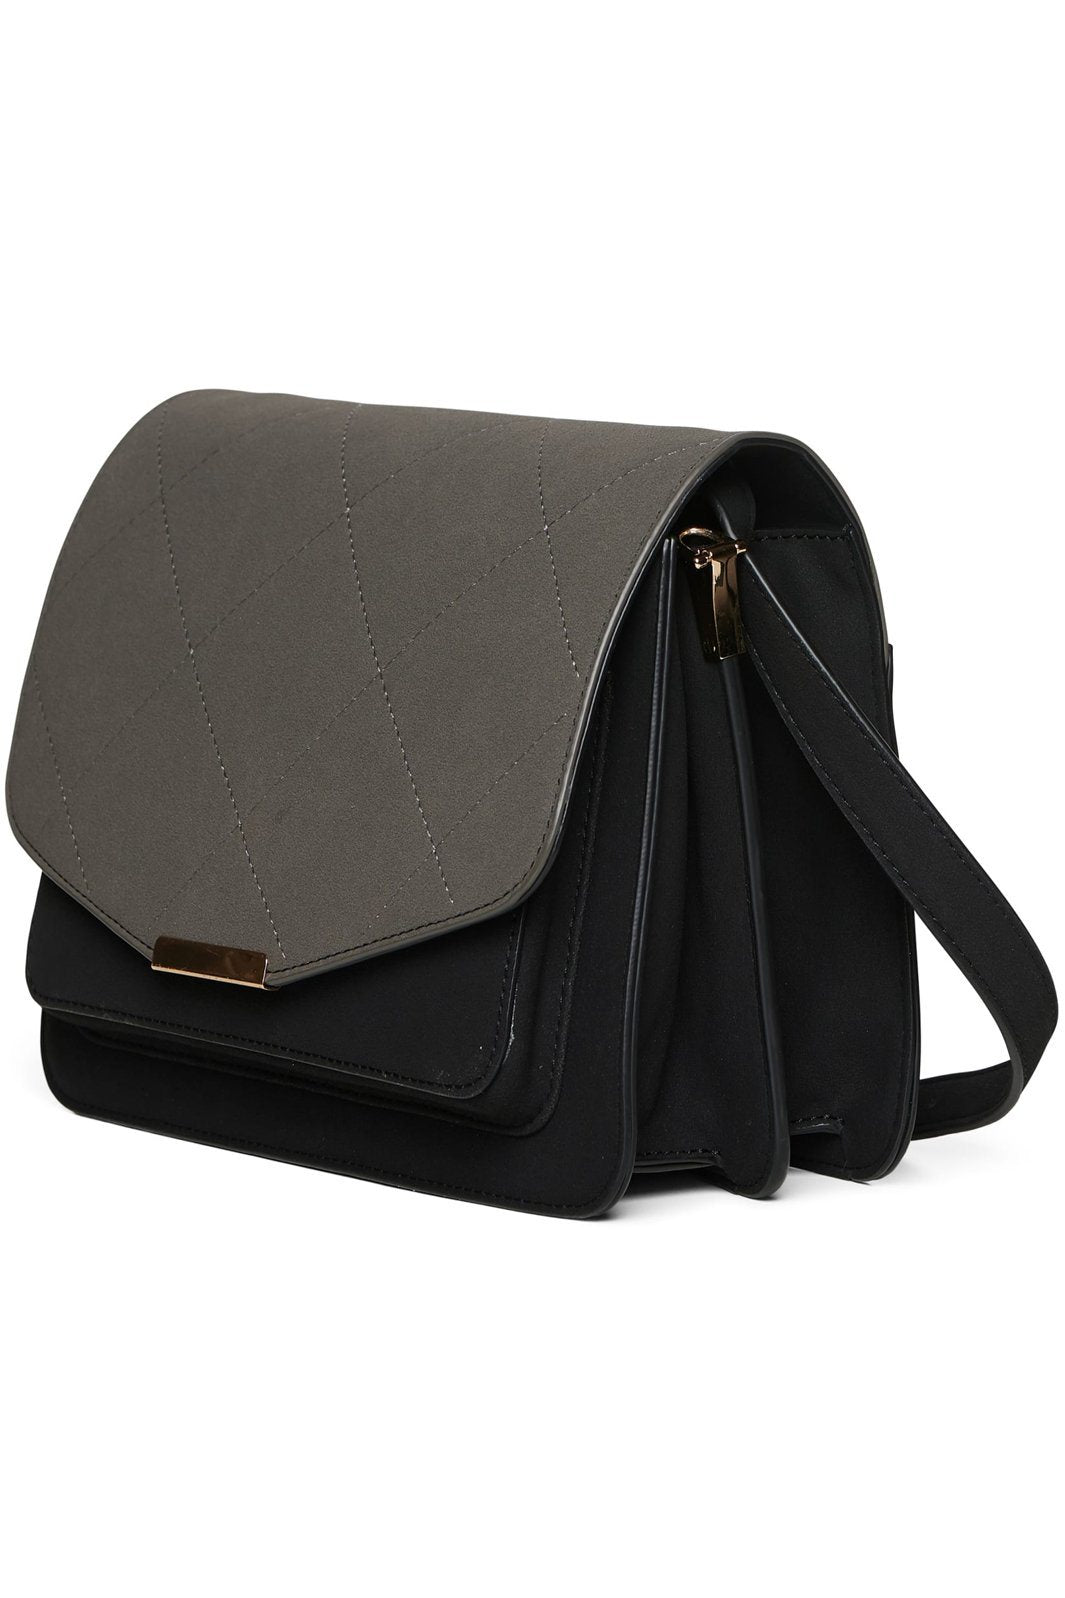 Noella - Blanca Multi Compartment Bag - Dark Grey/Black Tasker 